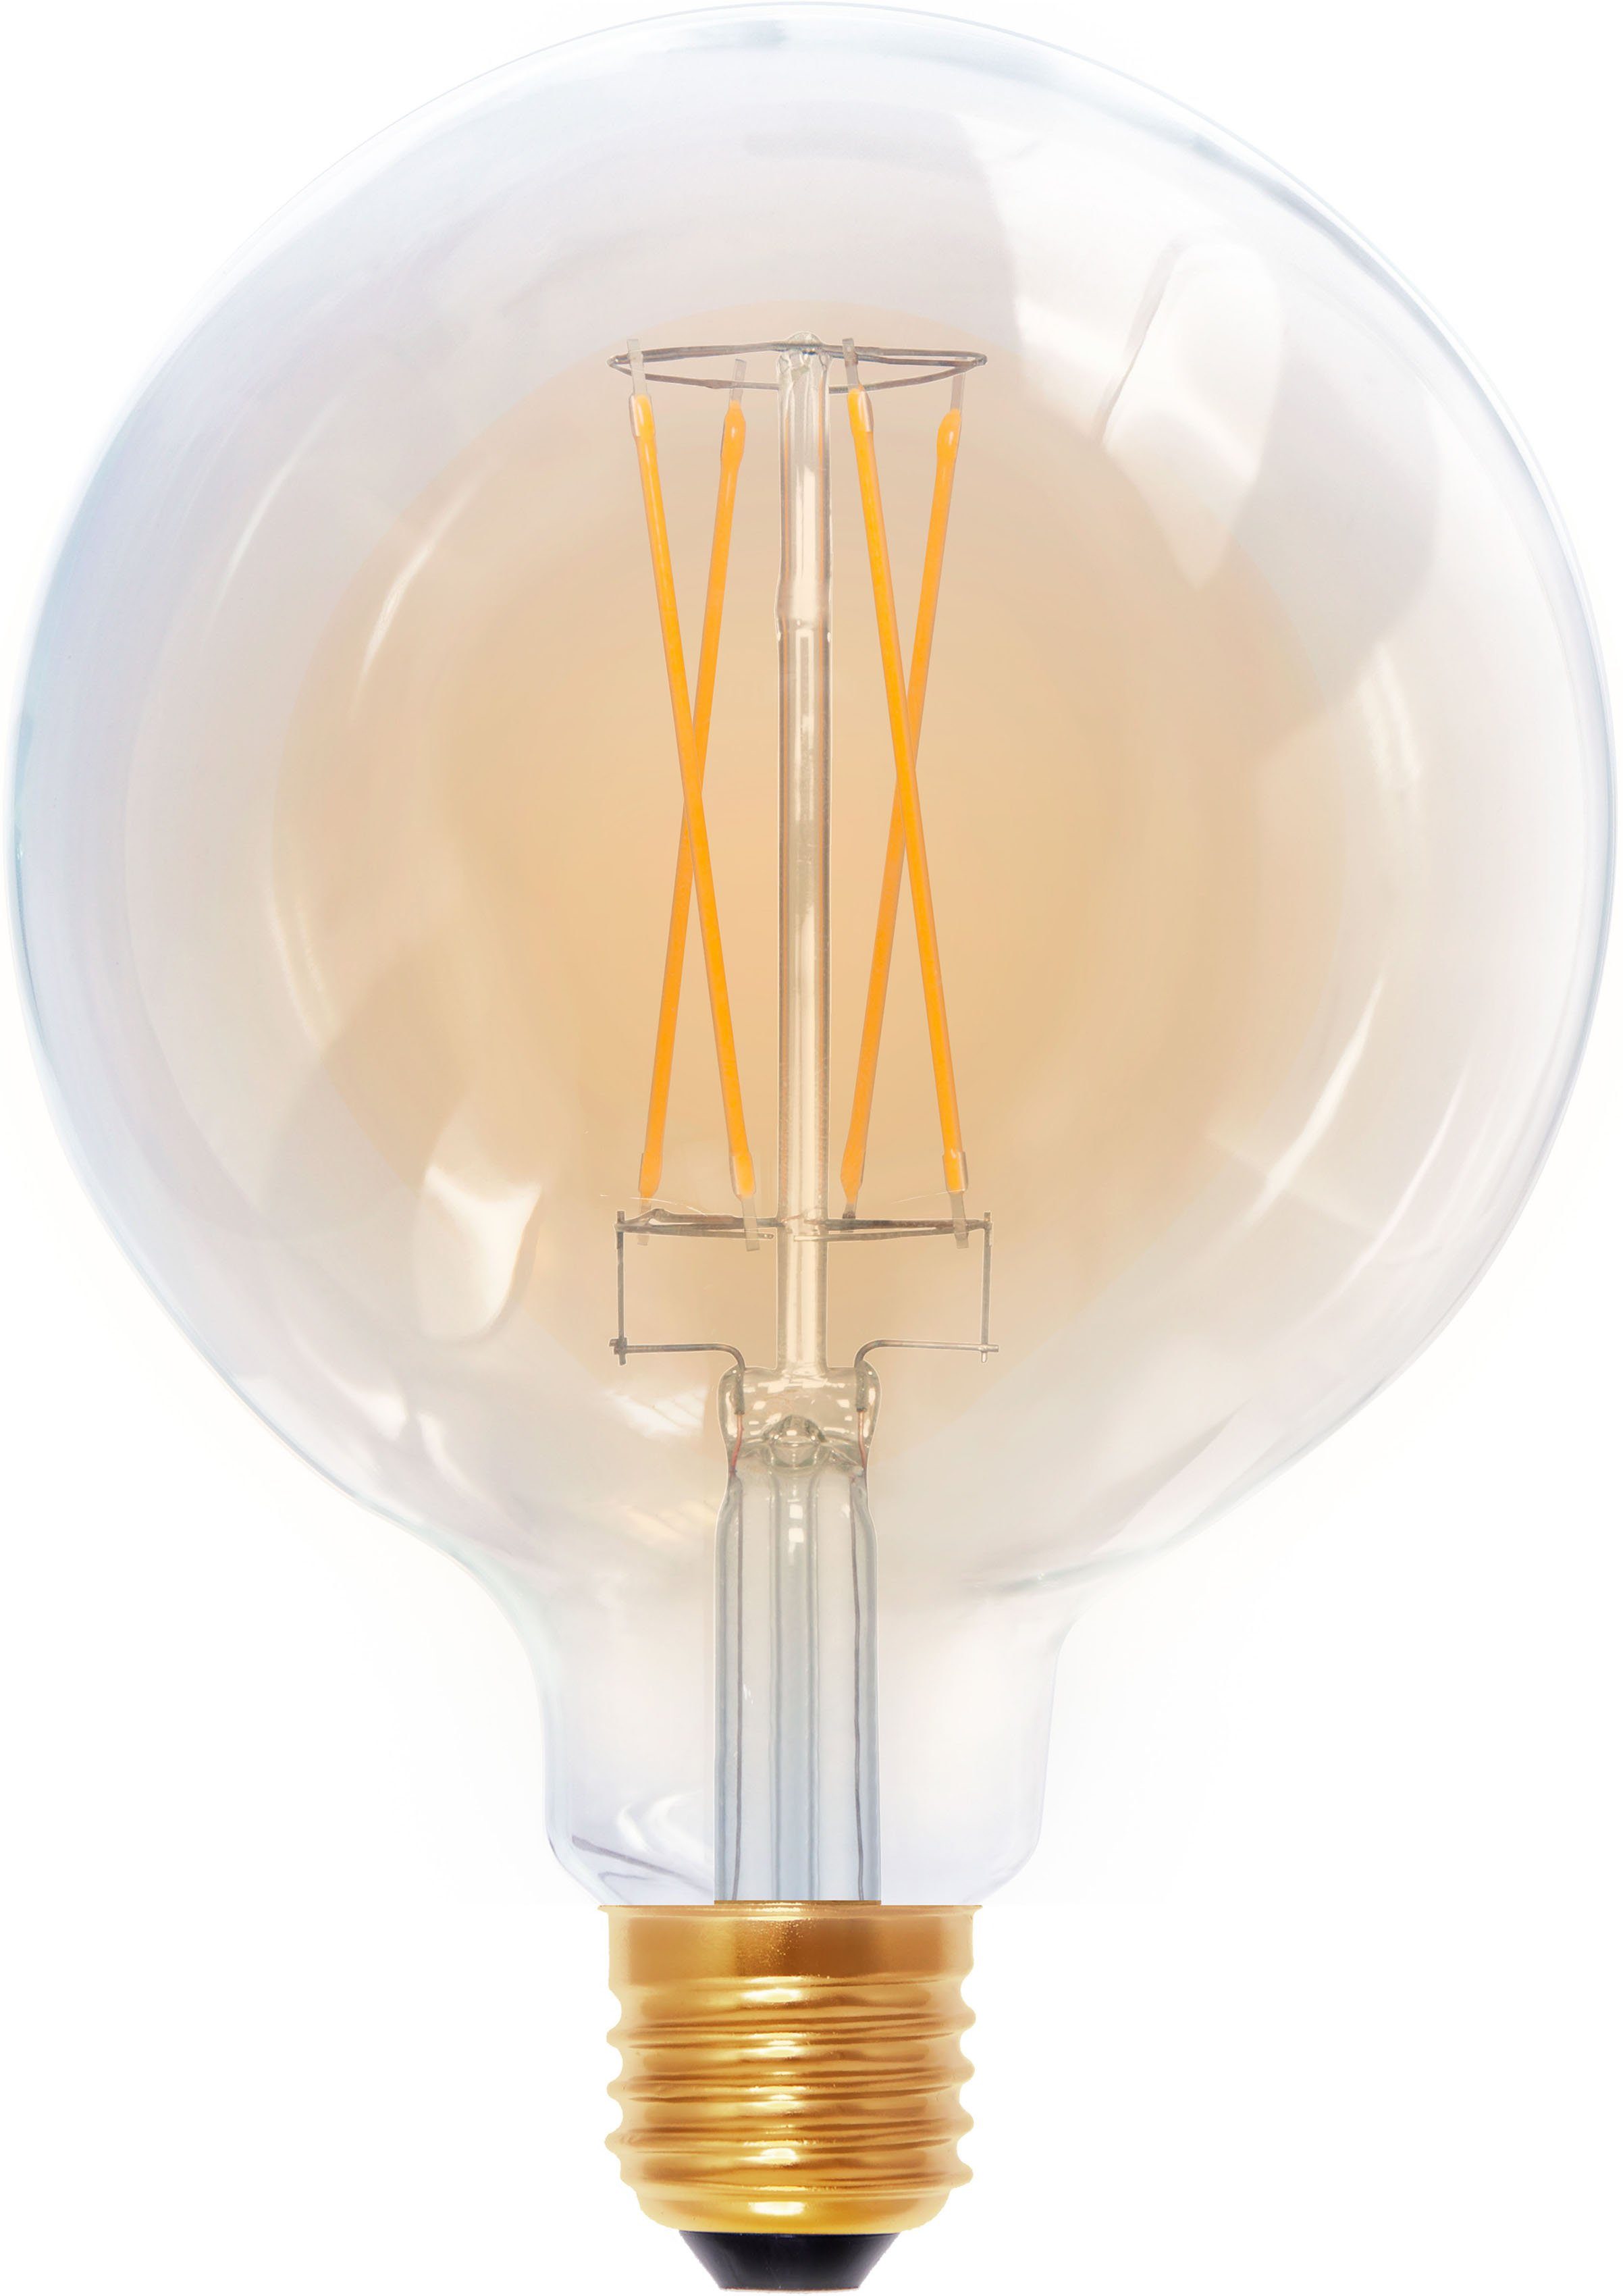 SEGULA LED-Leuchtmittel LED 125 Globe E27, gold, 125, dimmbar, Warmweiß, Globe gold E27